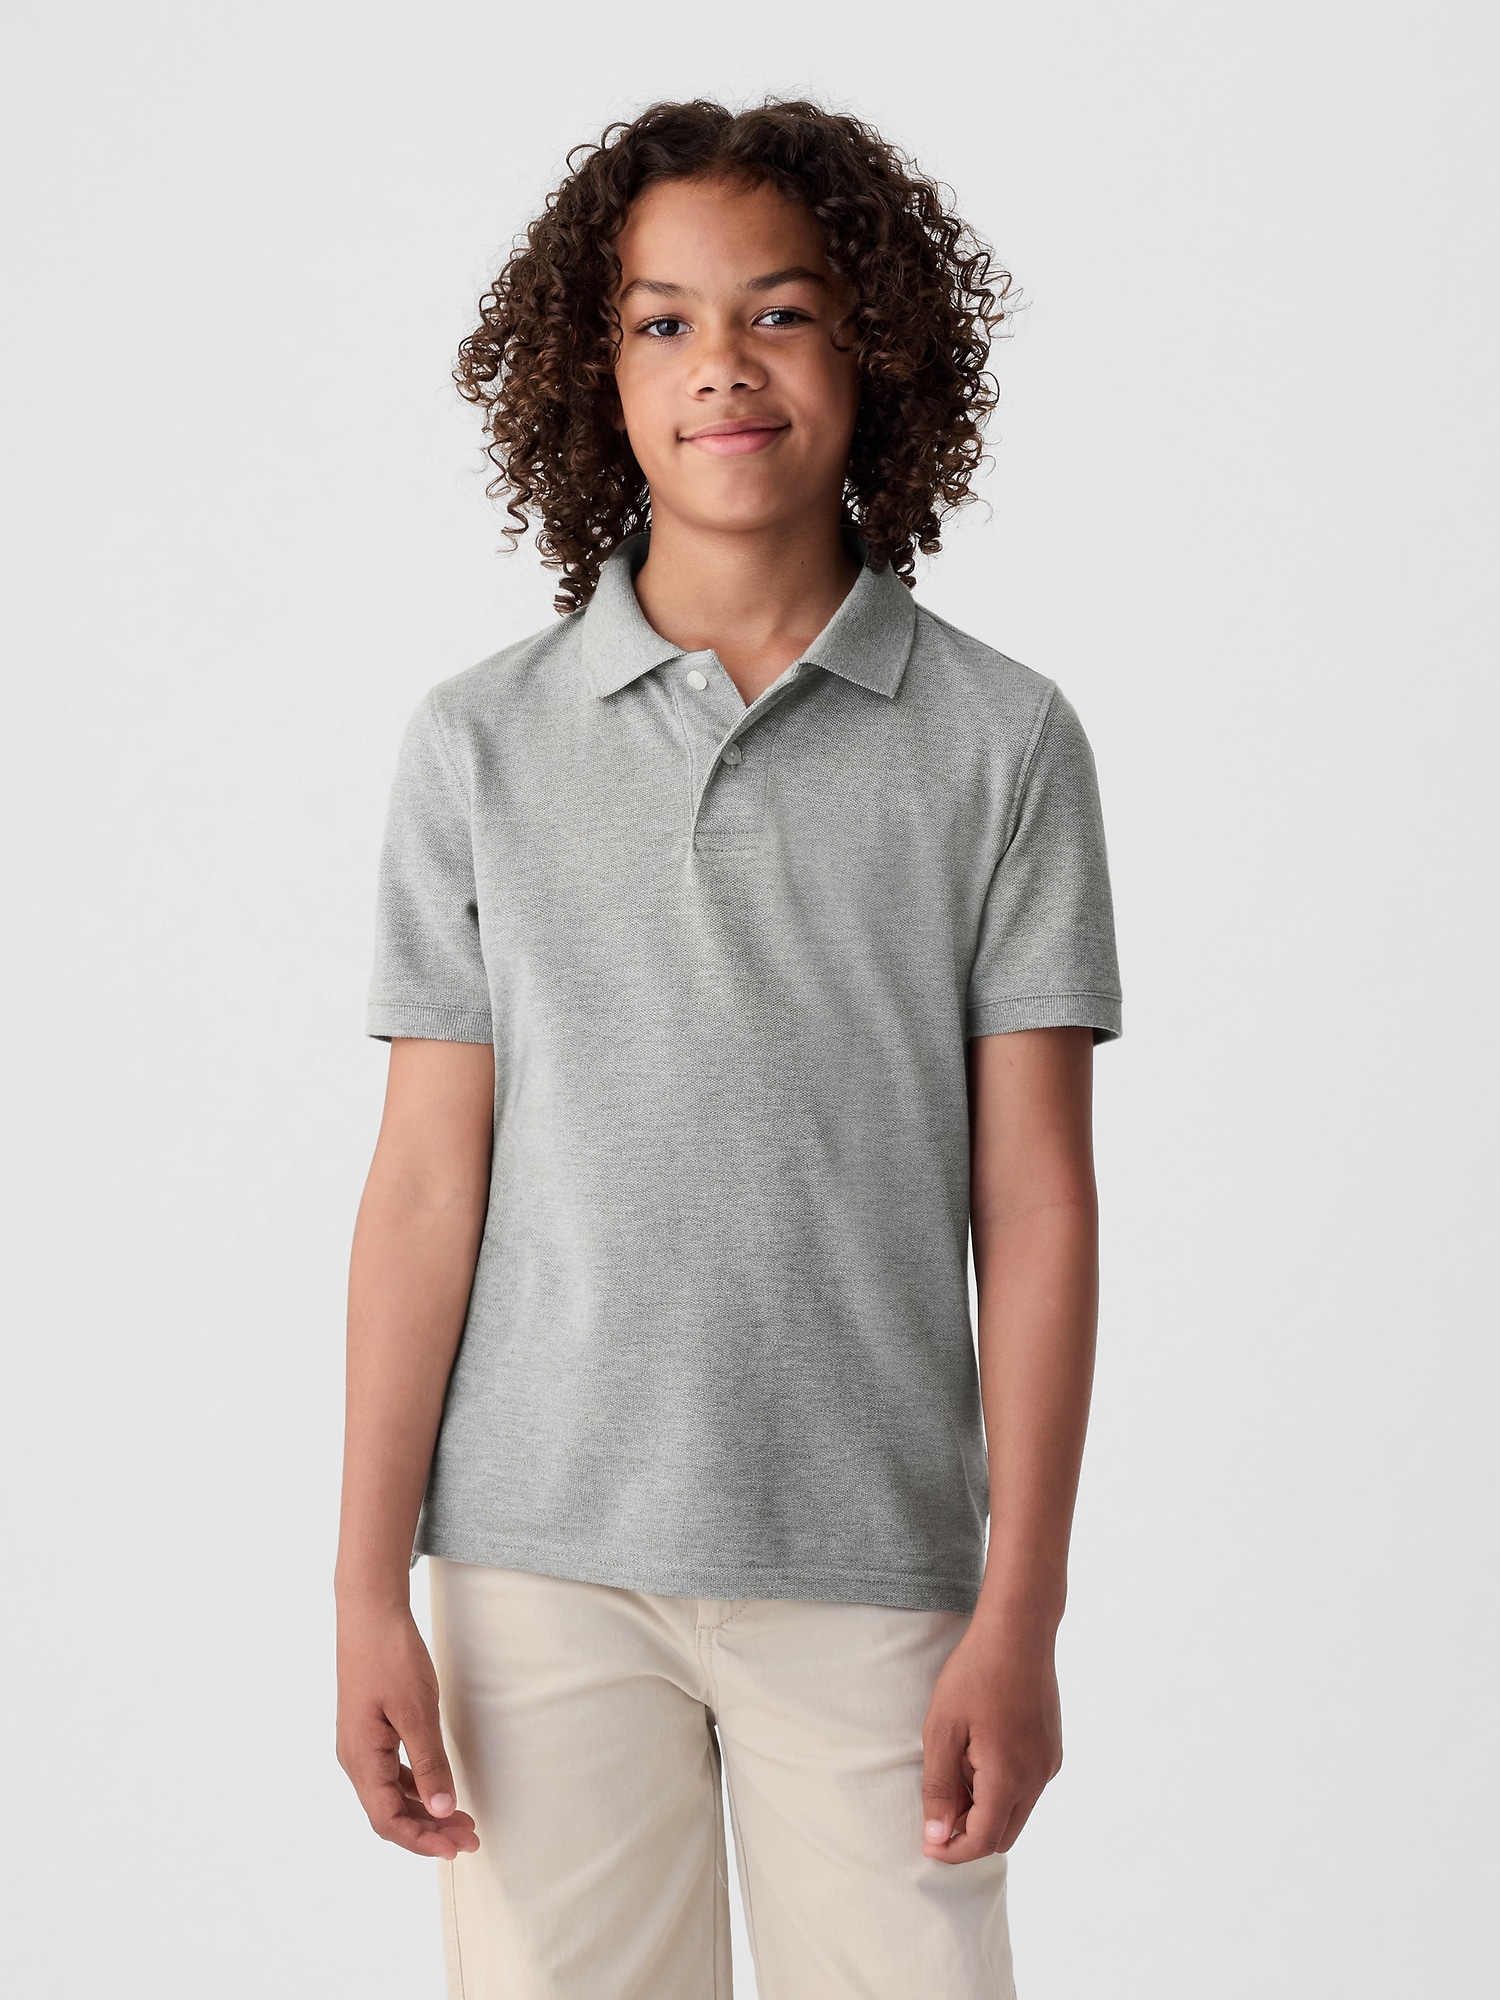 Kids Uniform Polo Shirt